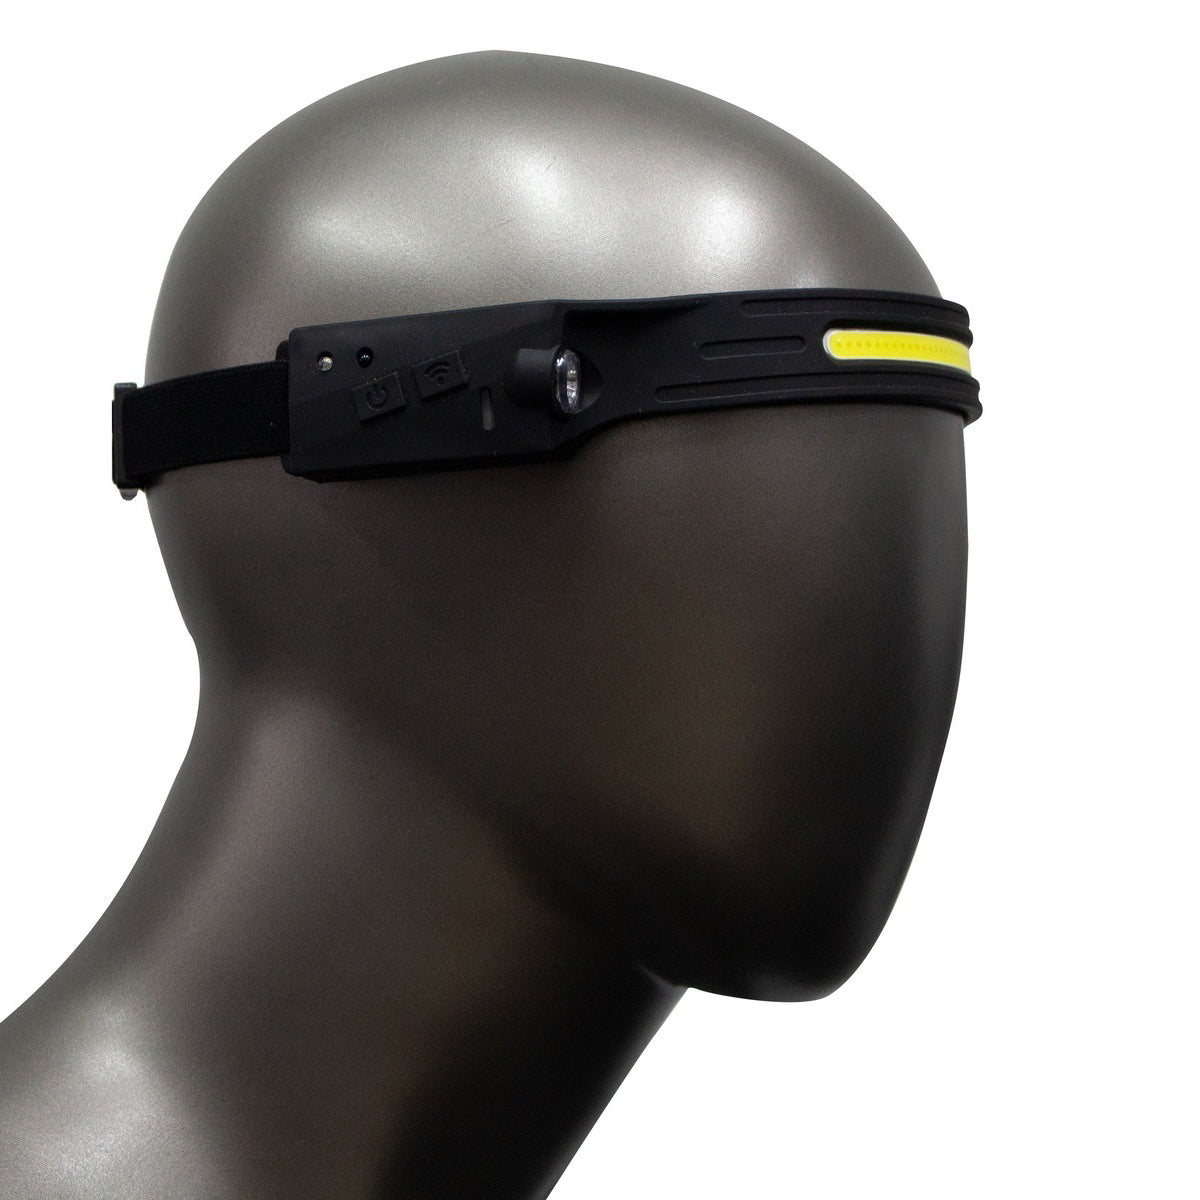 Rechargeable & Adjustable Headlamp with sensor mode